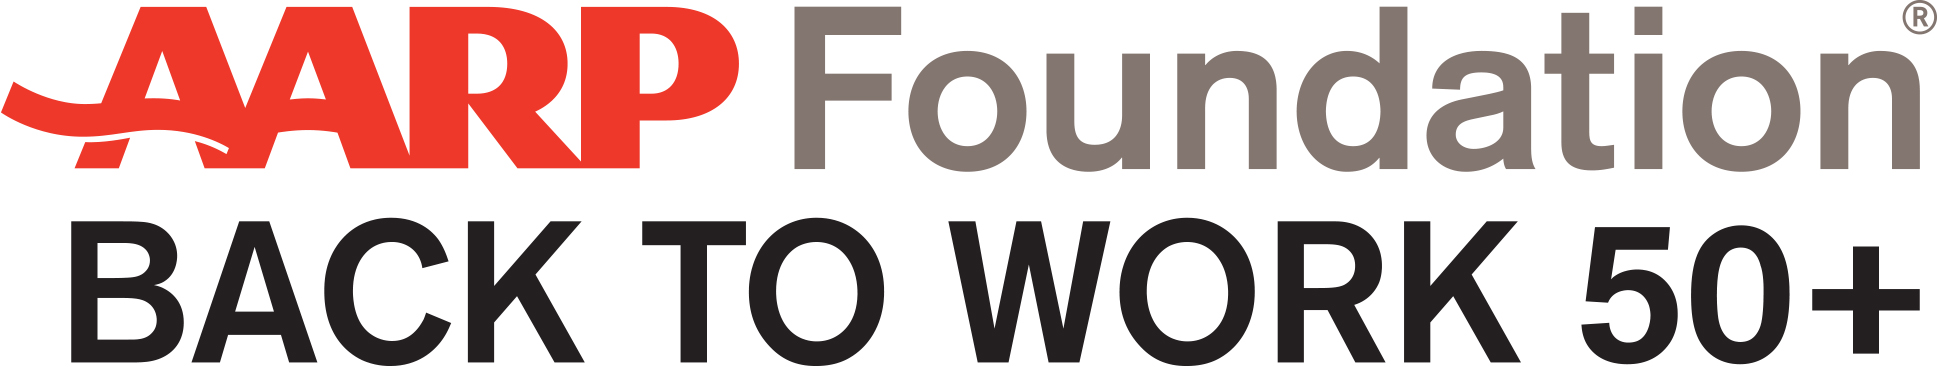 aarp foundation logo